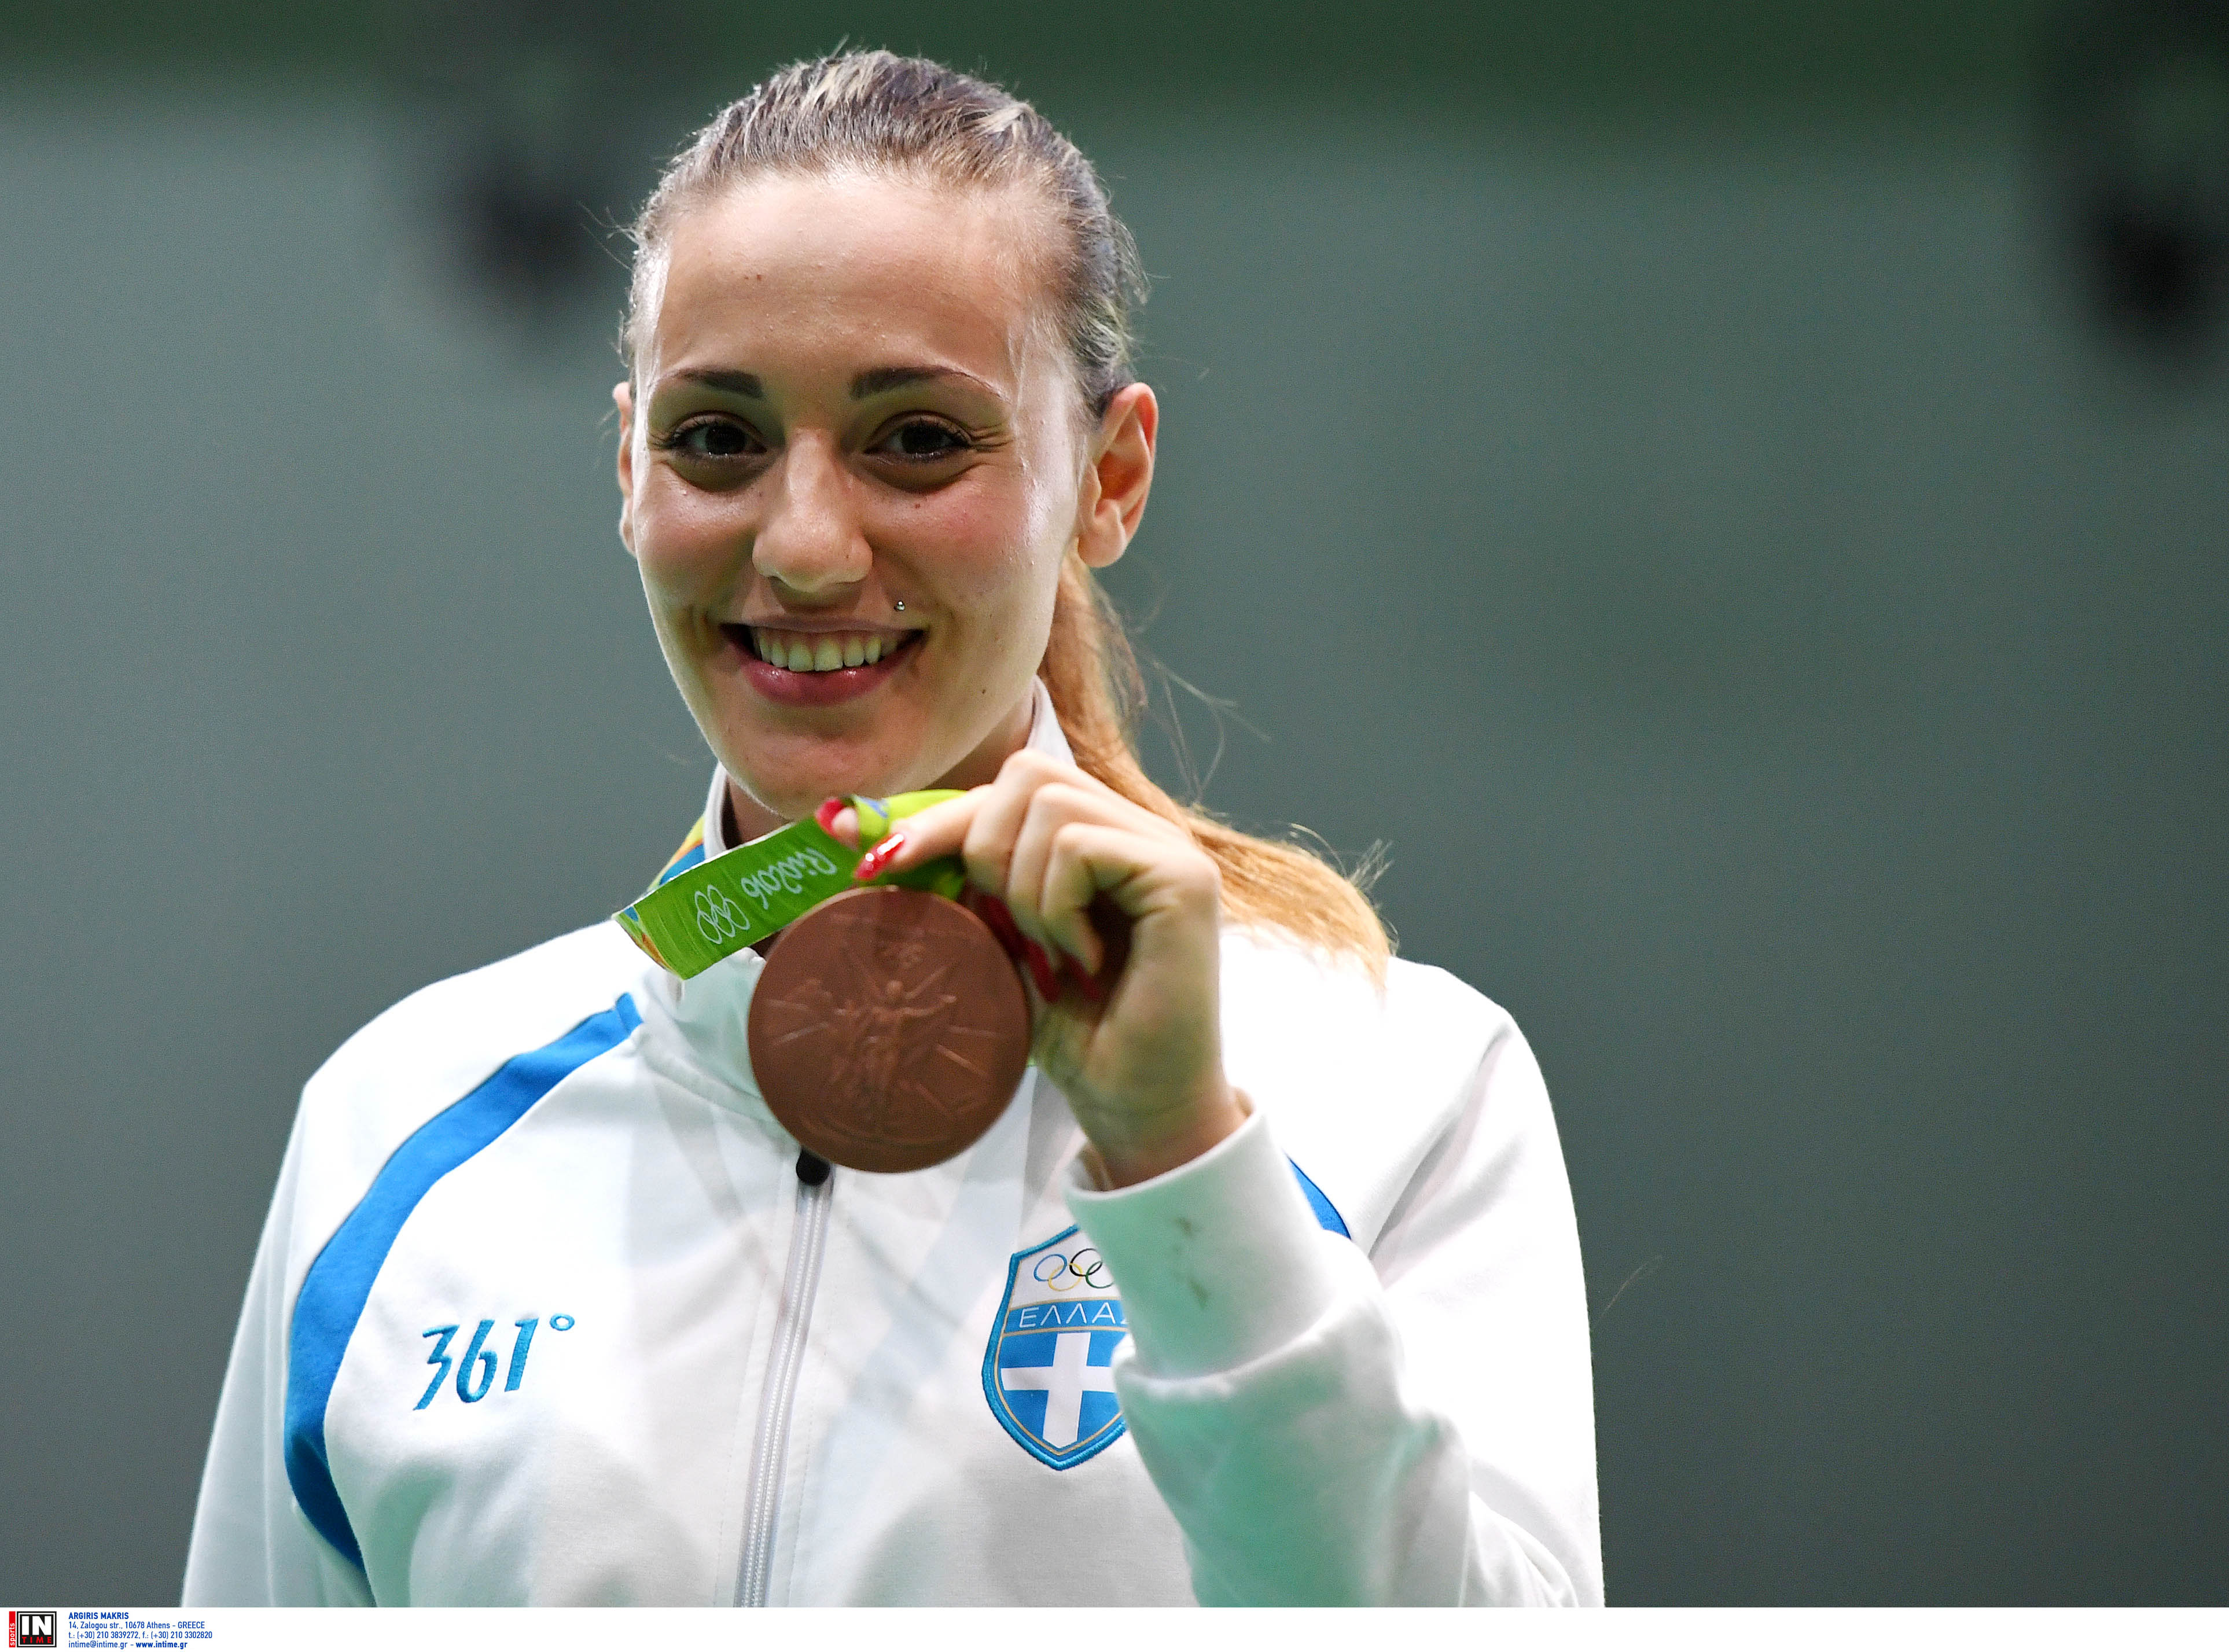 Rio 2016: Korakaki bags the first medal for Greece